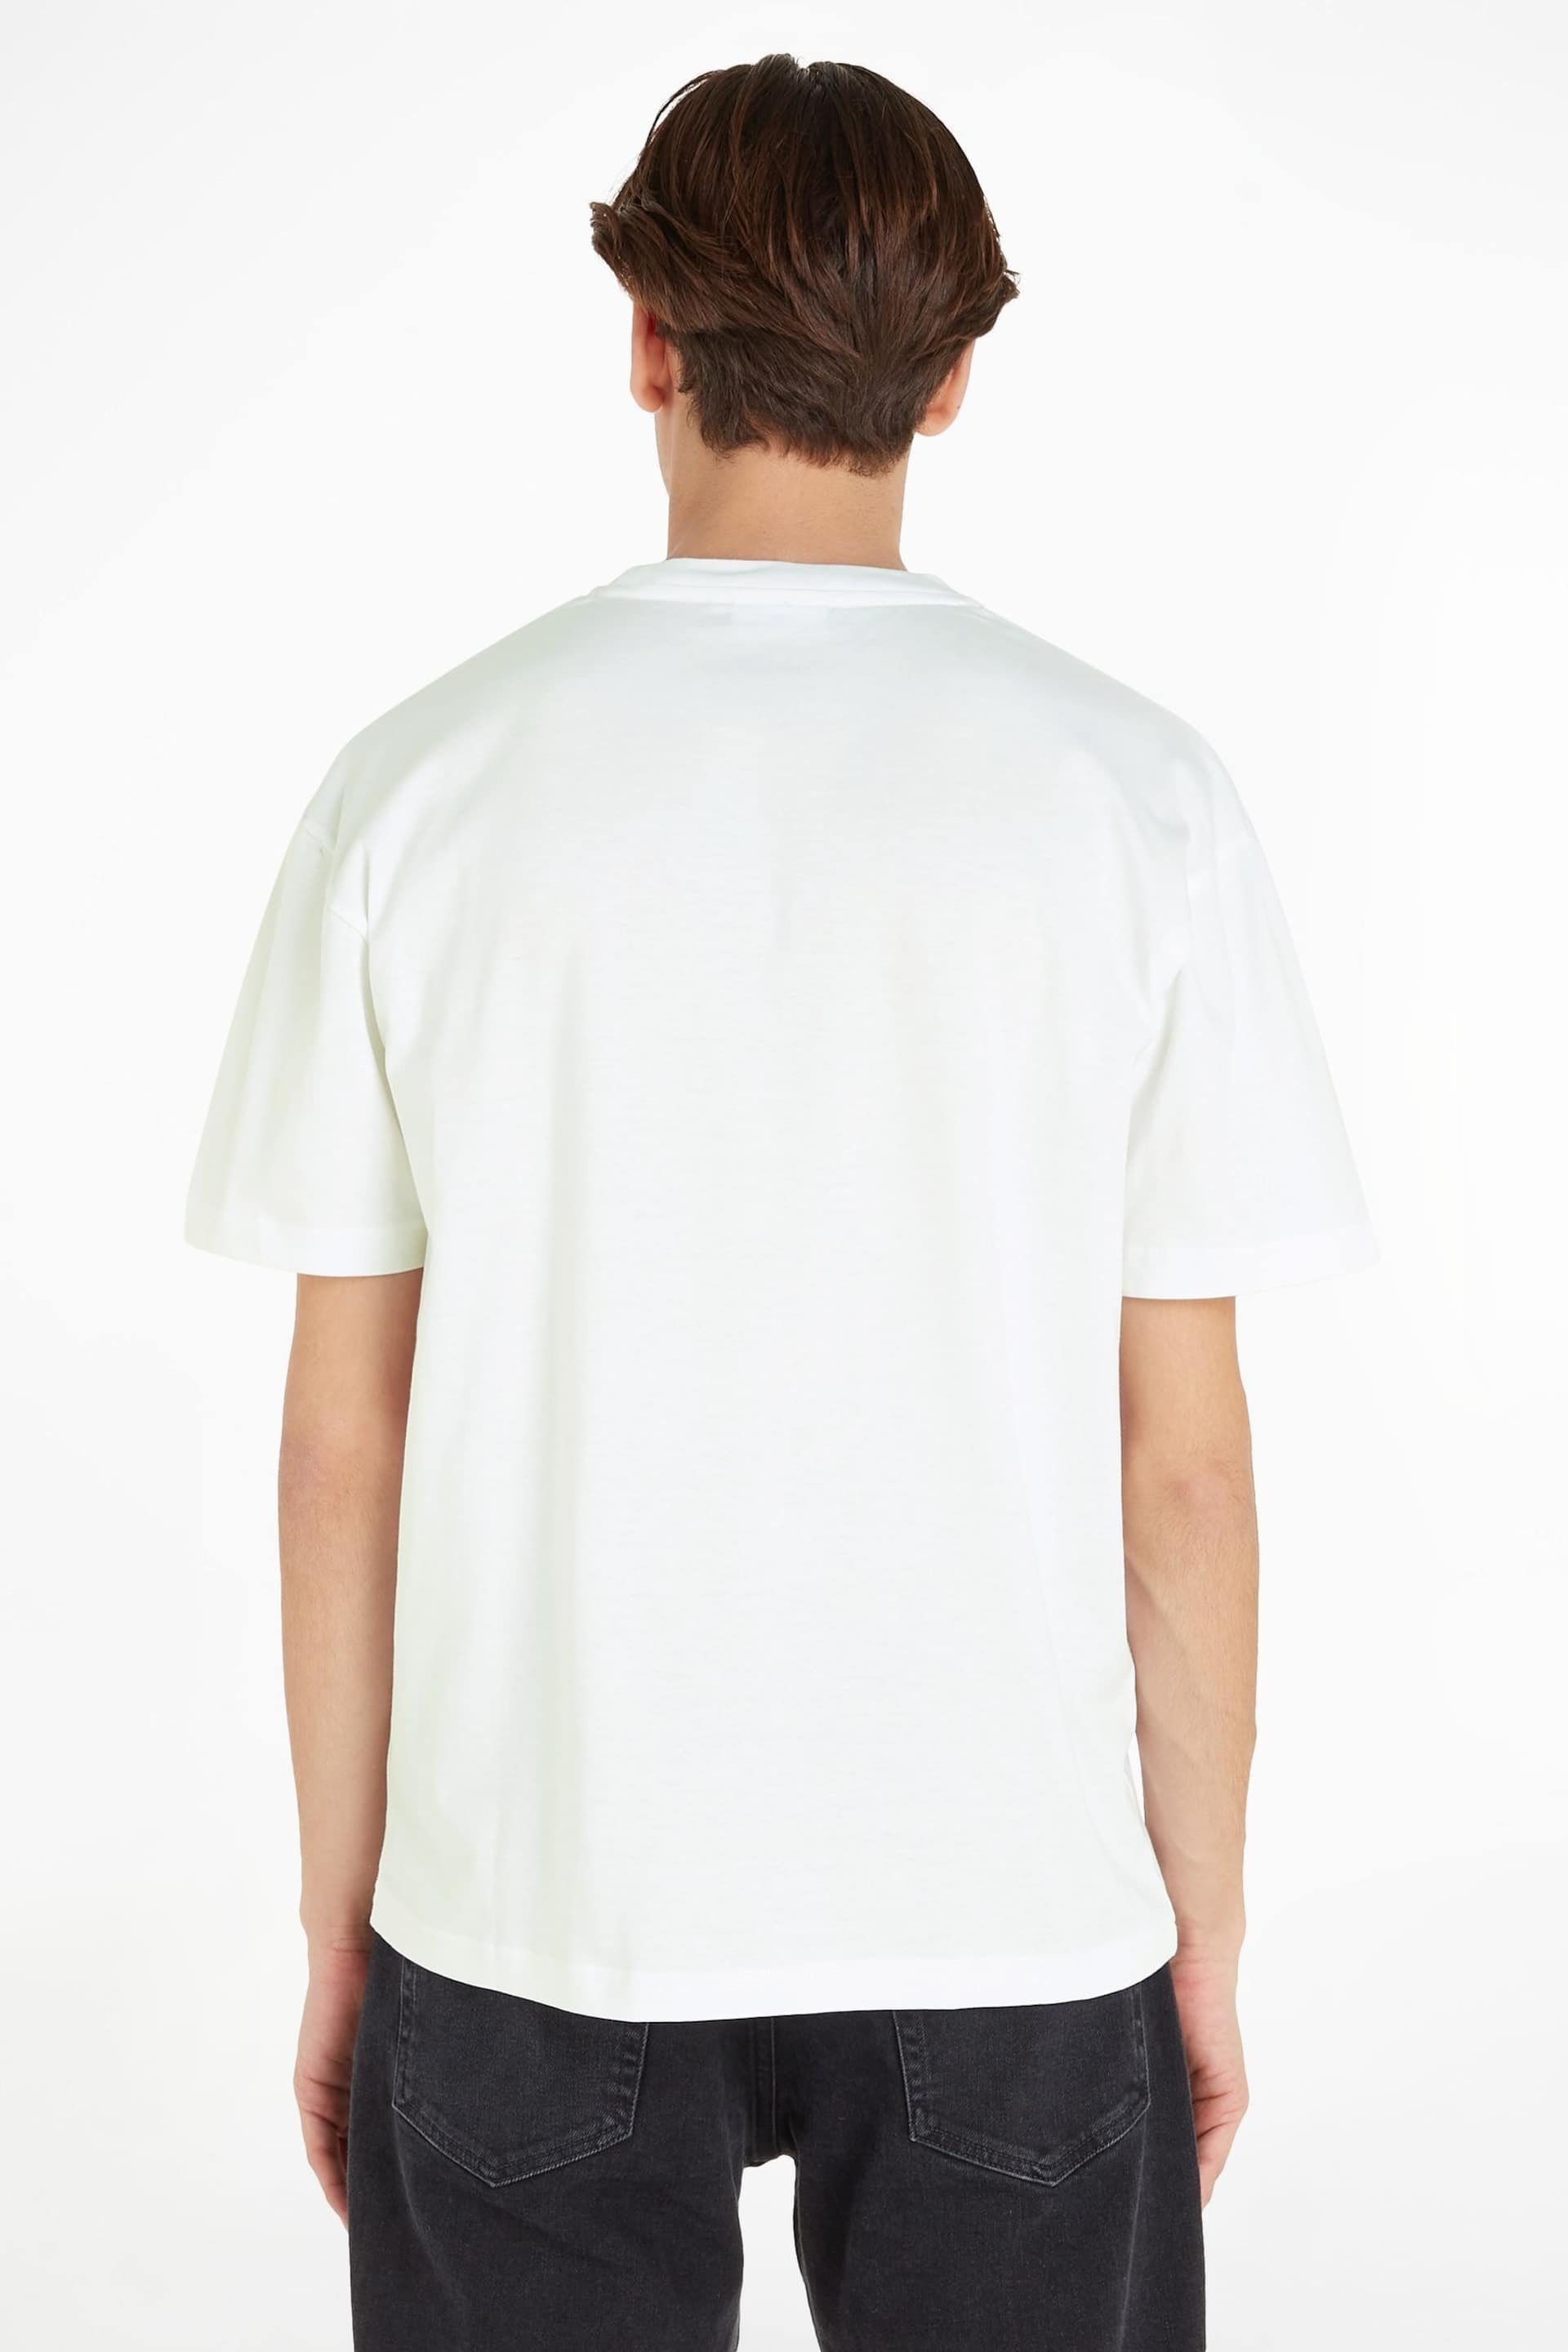 Calvin Klein White Slim Fit Logo Comfort T-Shirt - Image 2 of 6